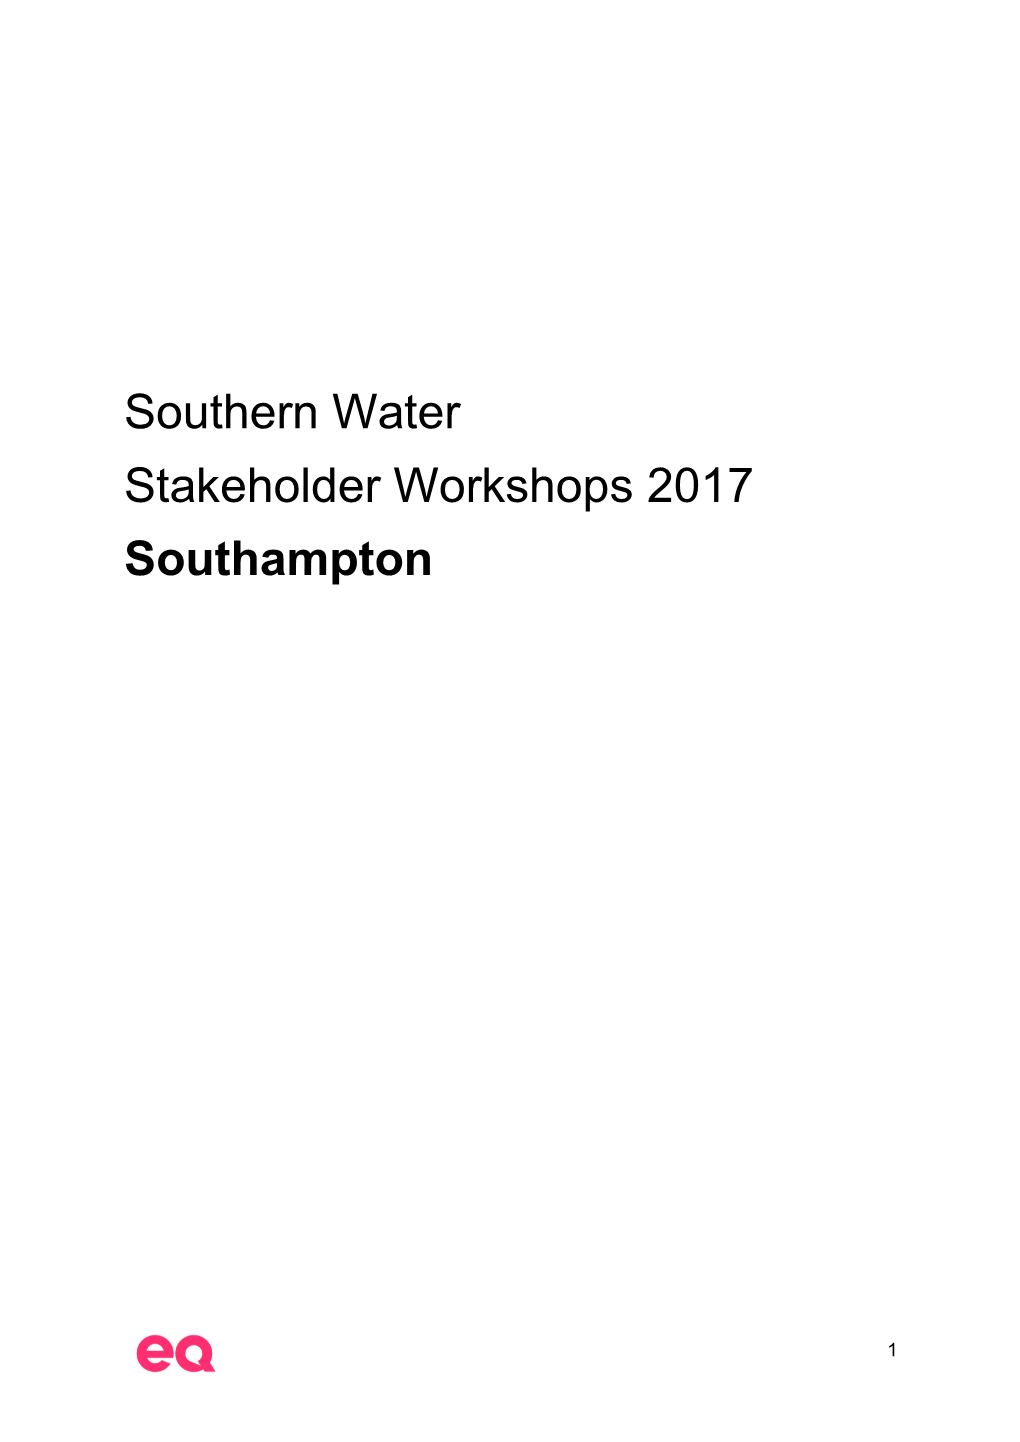 Southern Water Stakeholder Workshops 2017 Southampton